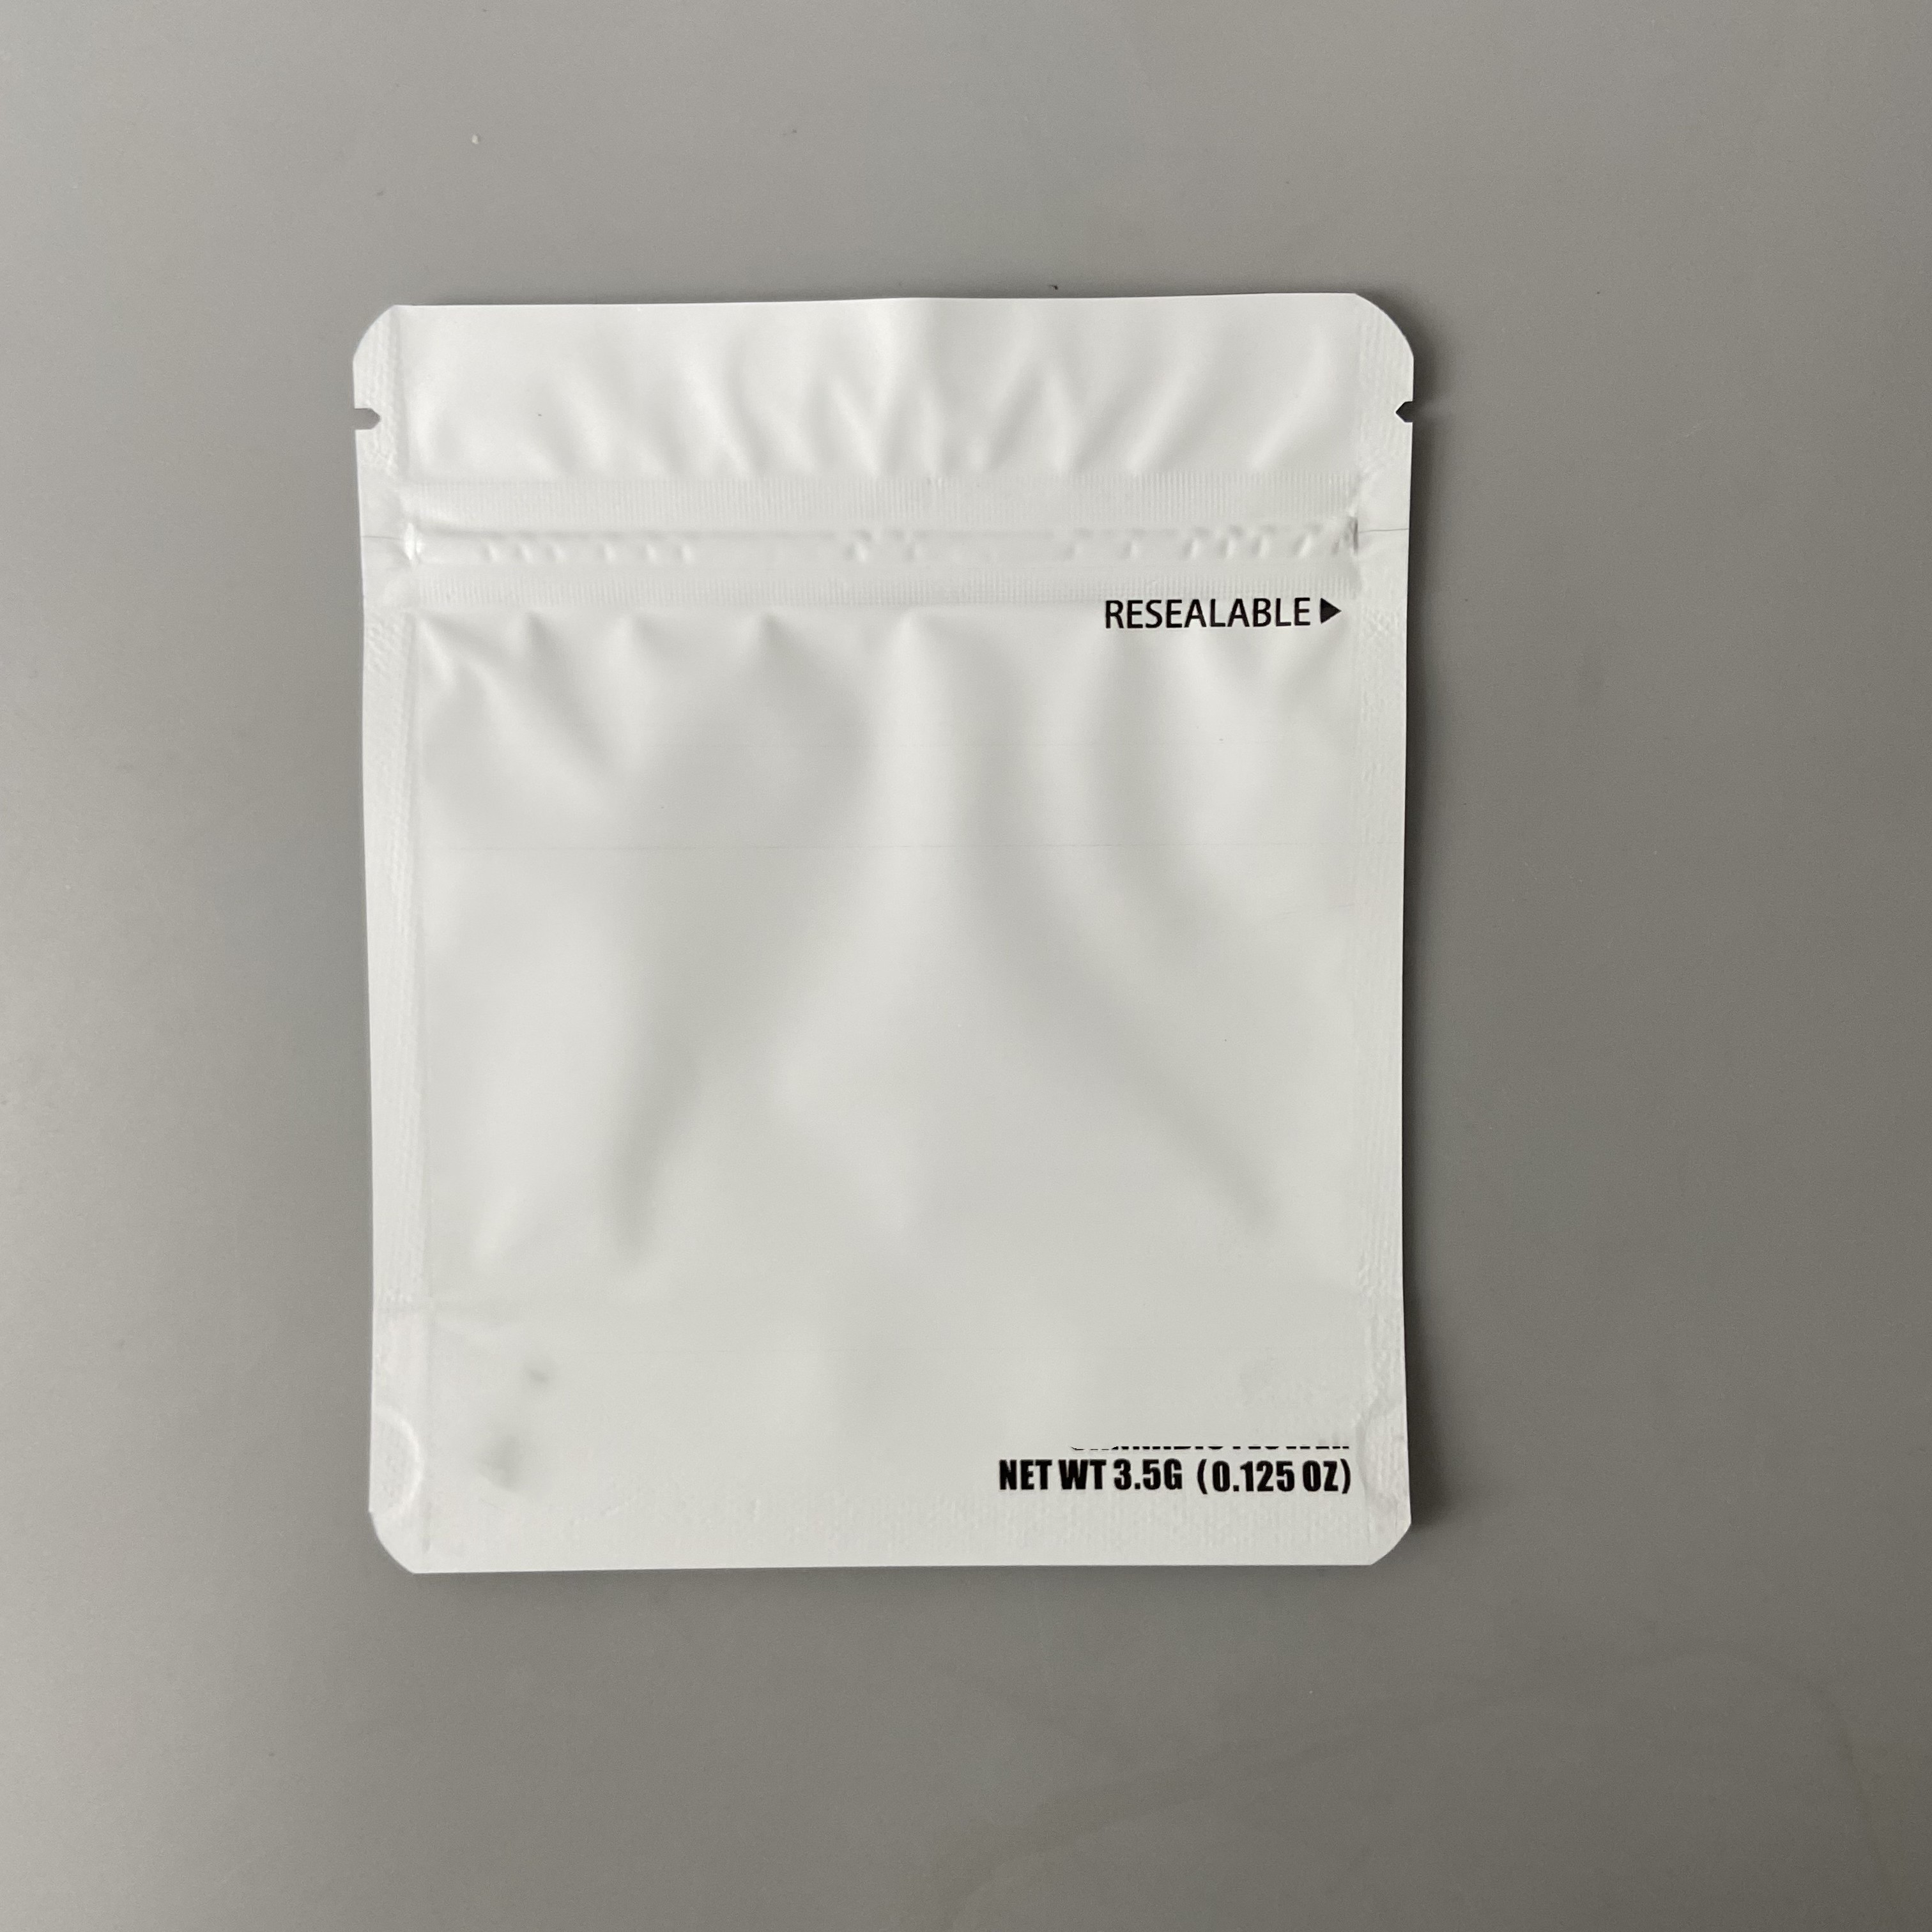 3.5g ziplock bags smell proof cali packs 420 packaging custom mylar bag sticker Customization